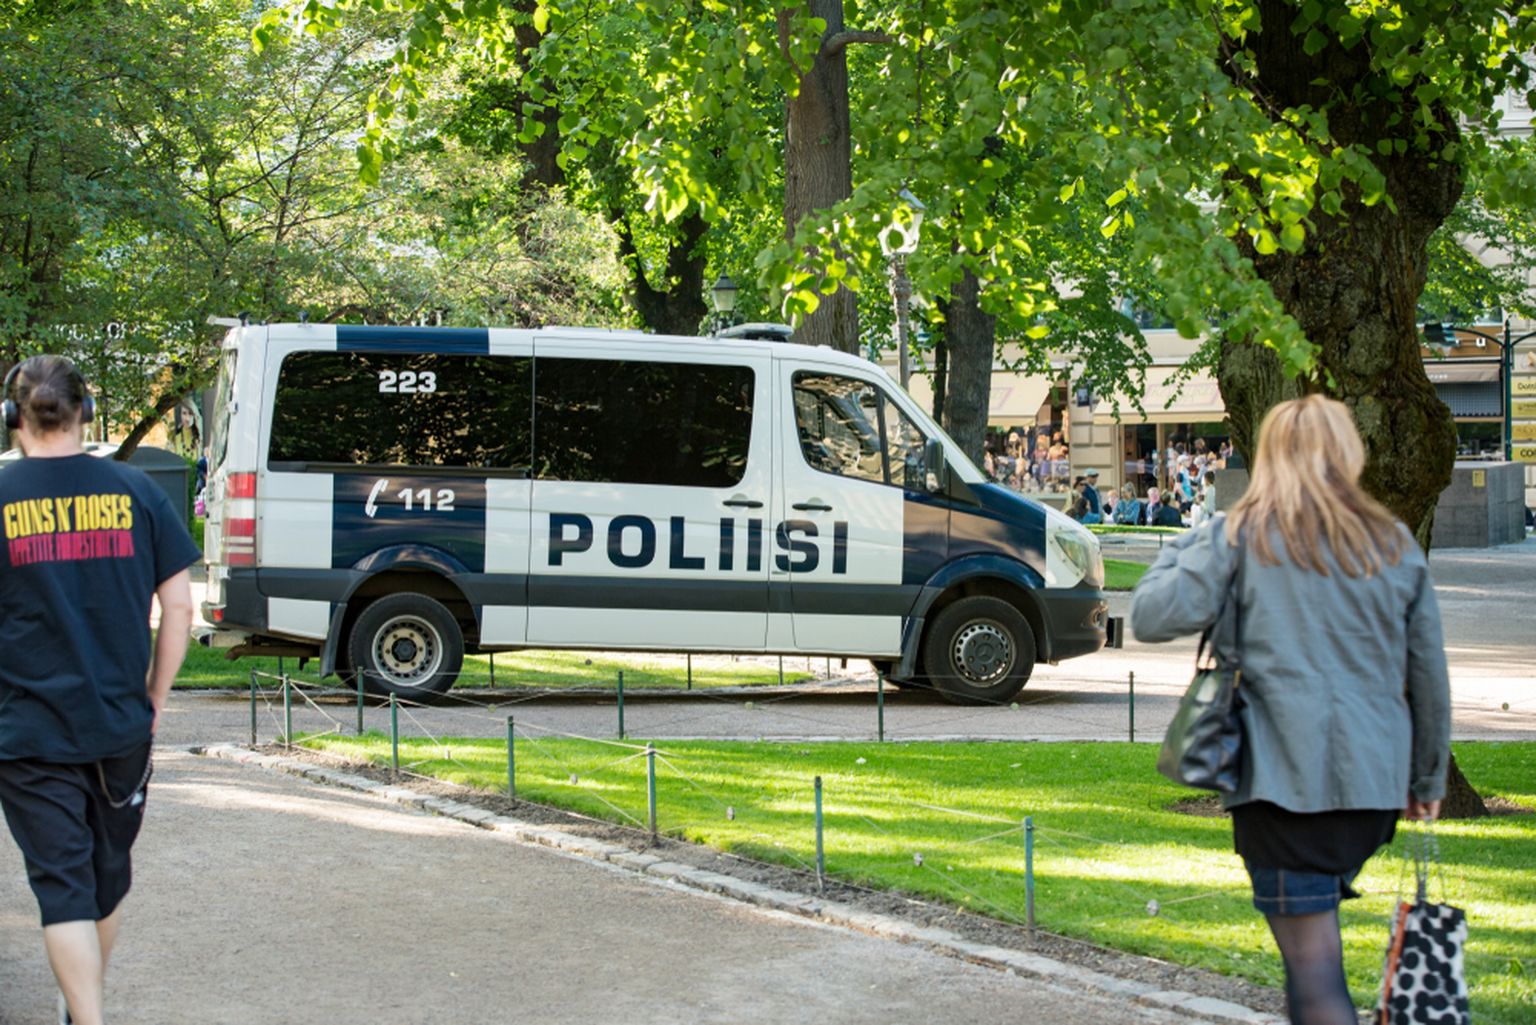 Soome politsei.